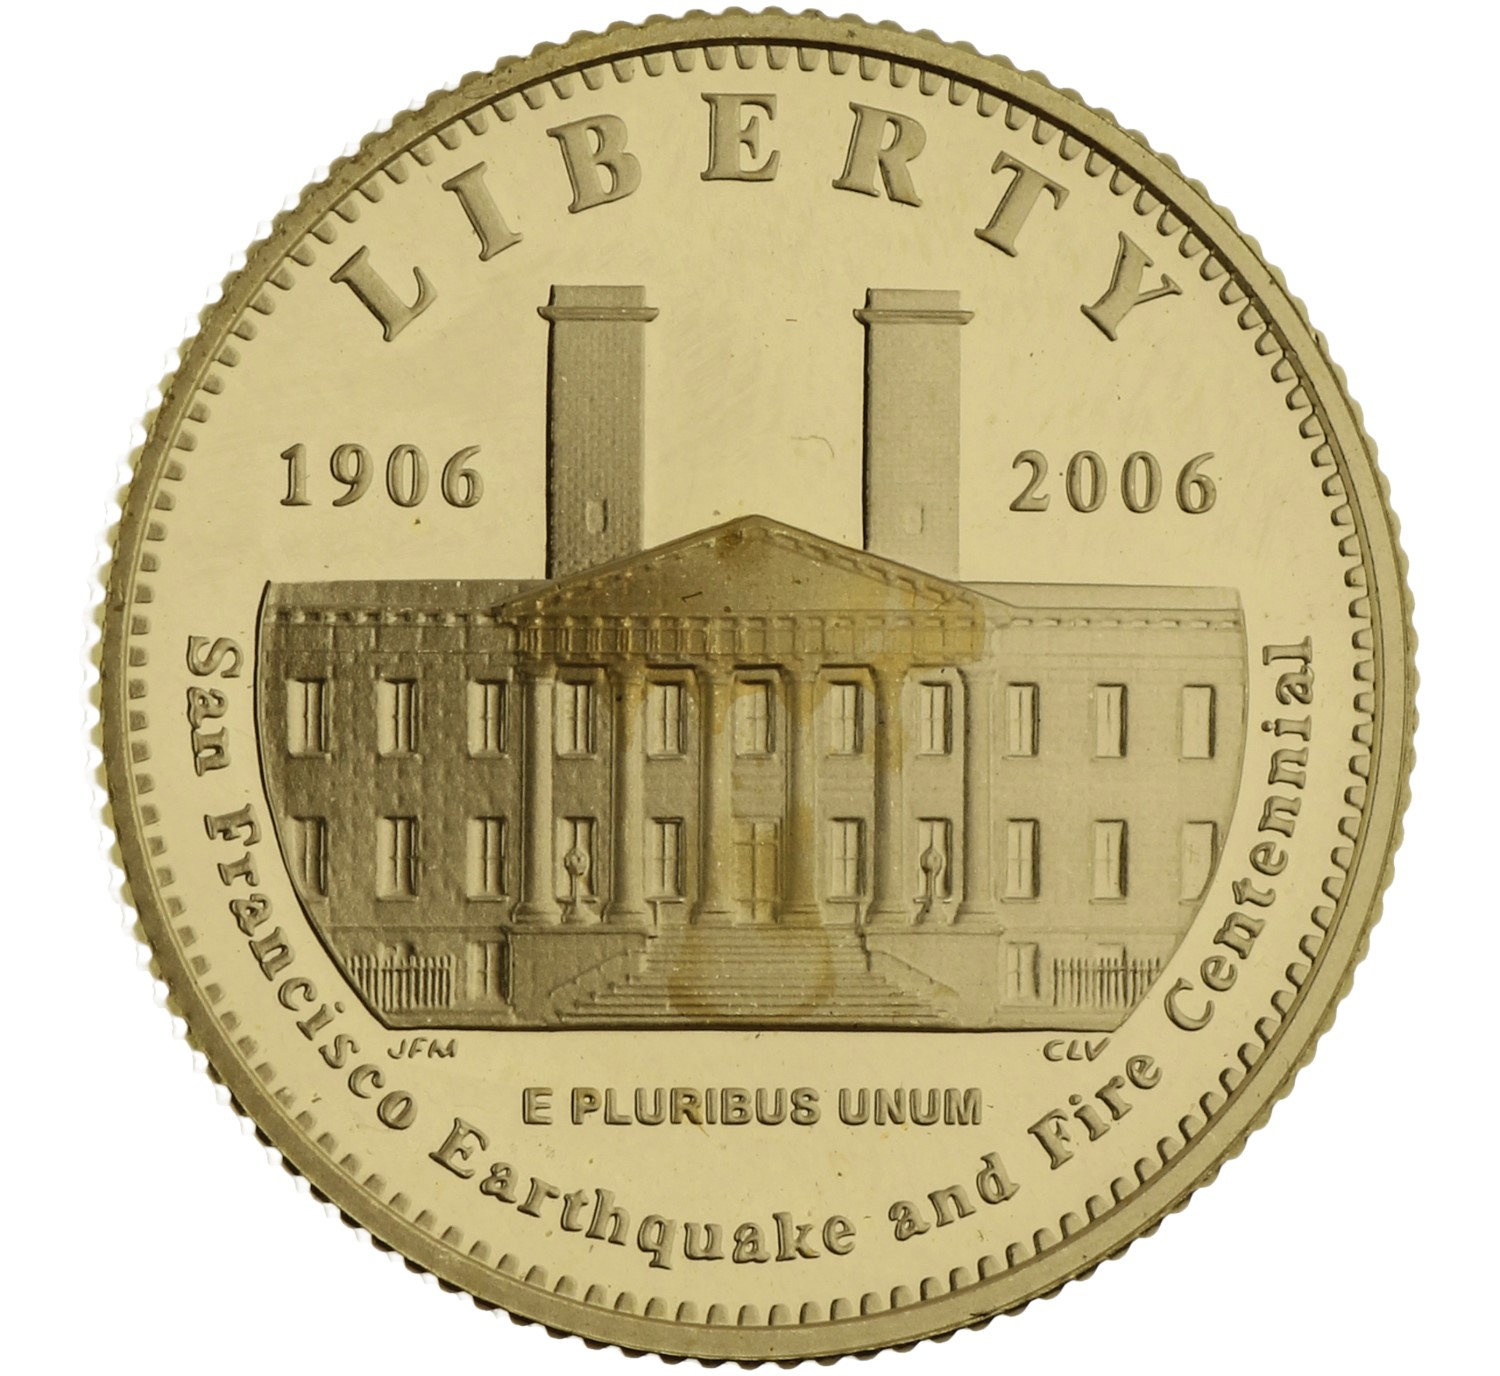 5 Dollars - USA - 2006 S